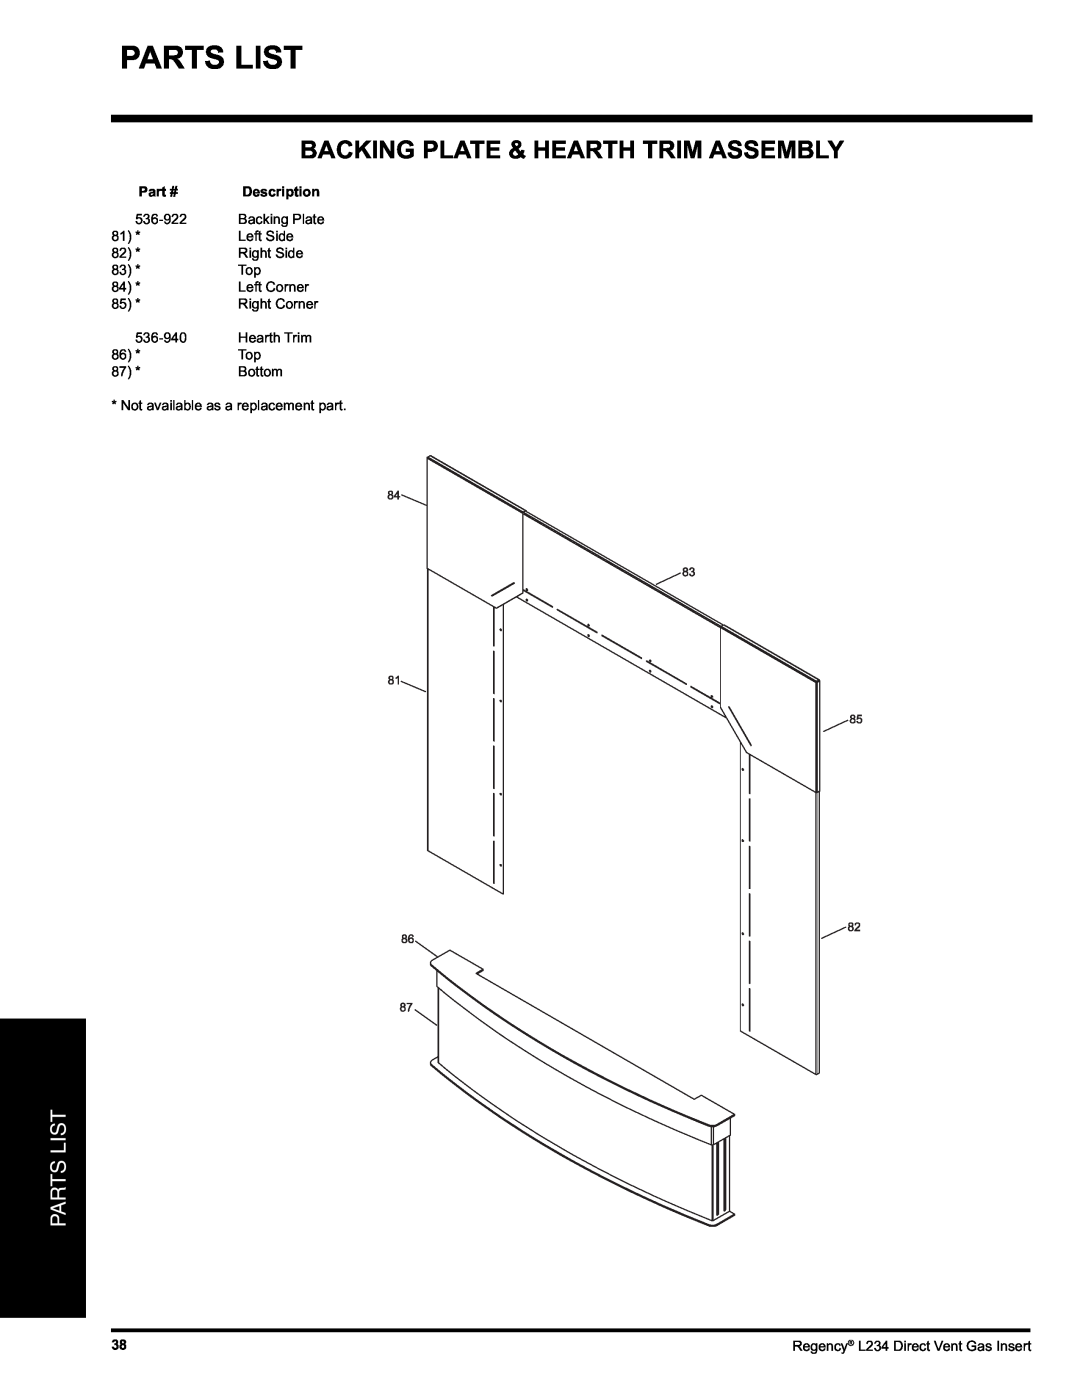 Regency L234-LP, L234-NG installation manual Parts List, Backing Plate & Hearth Trim Assembly, Description 